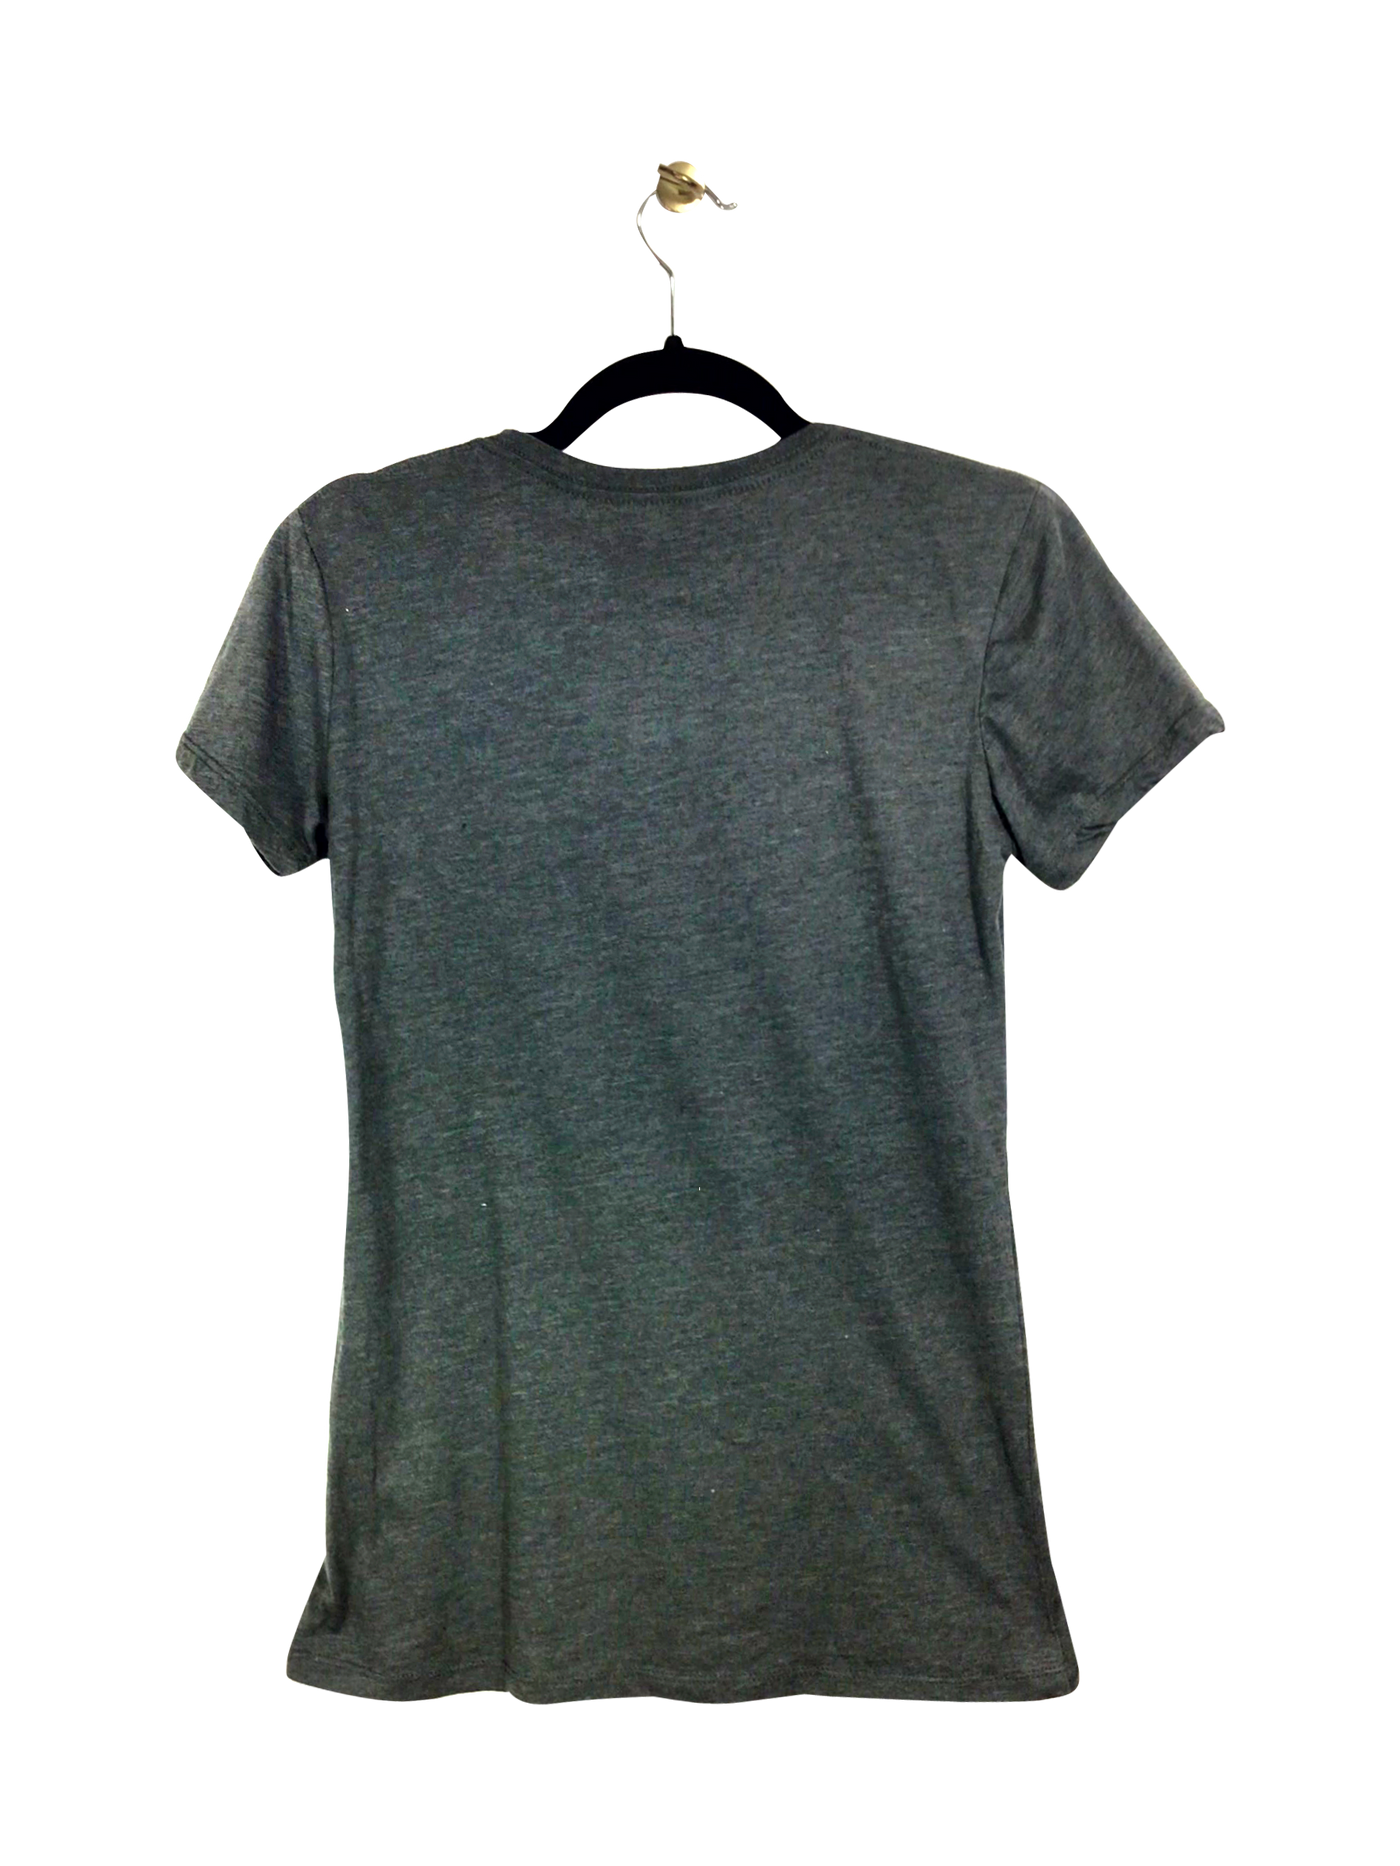 HEADLINE SHIRTS Regular fit T-shirt in Gray - Size M | 6.59 $ KOOP